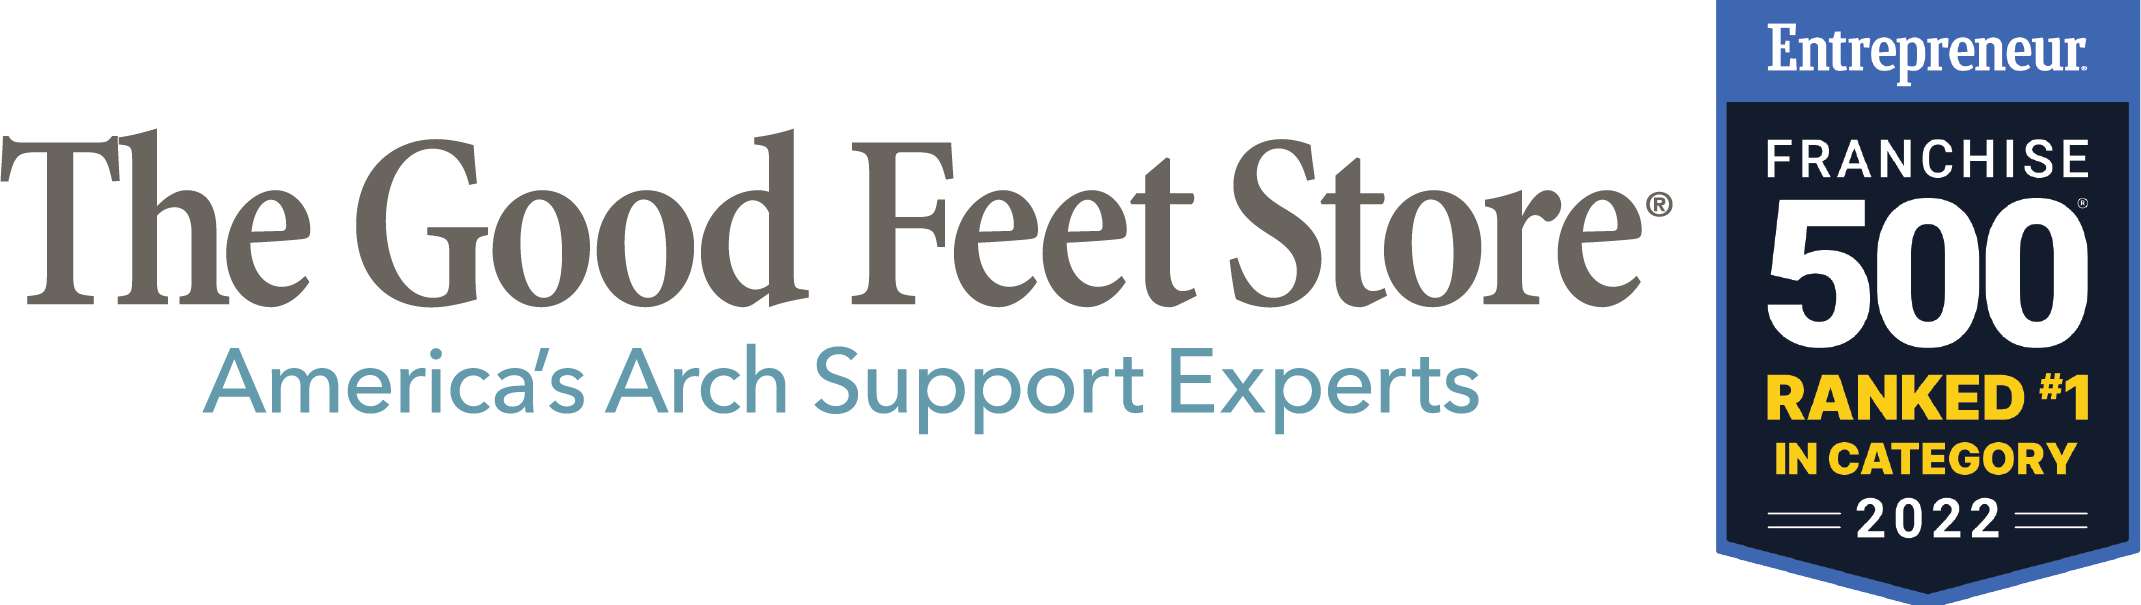 good-feet-logo-500-badge